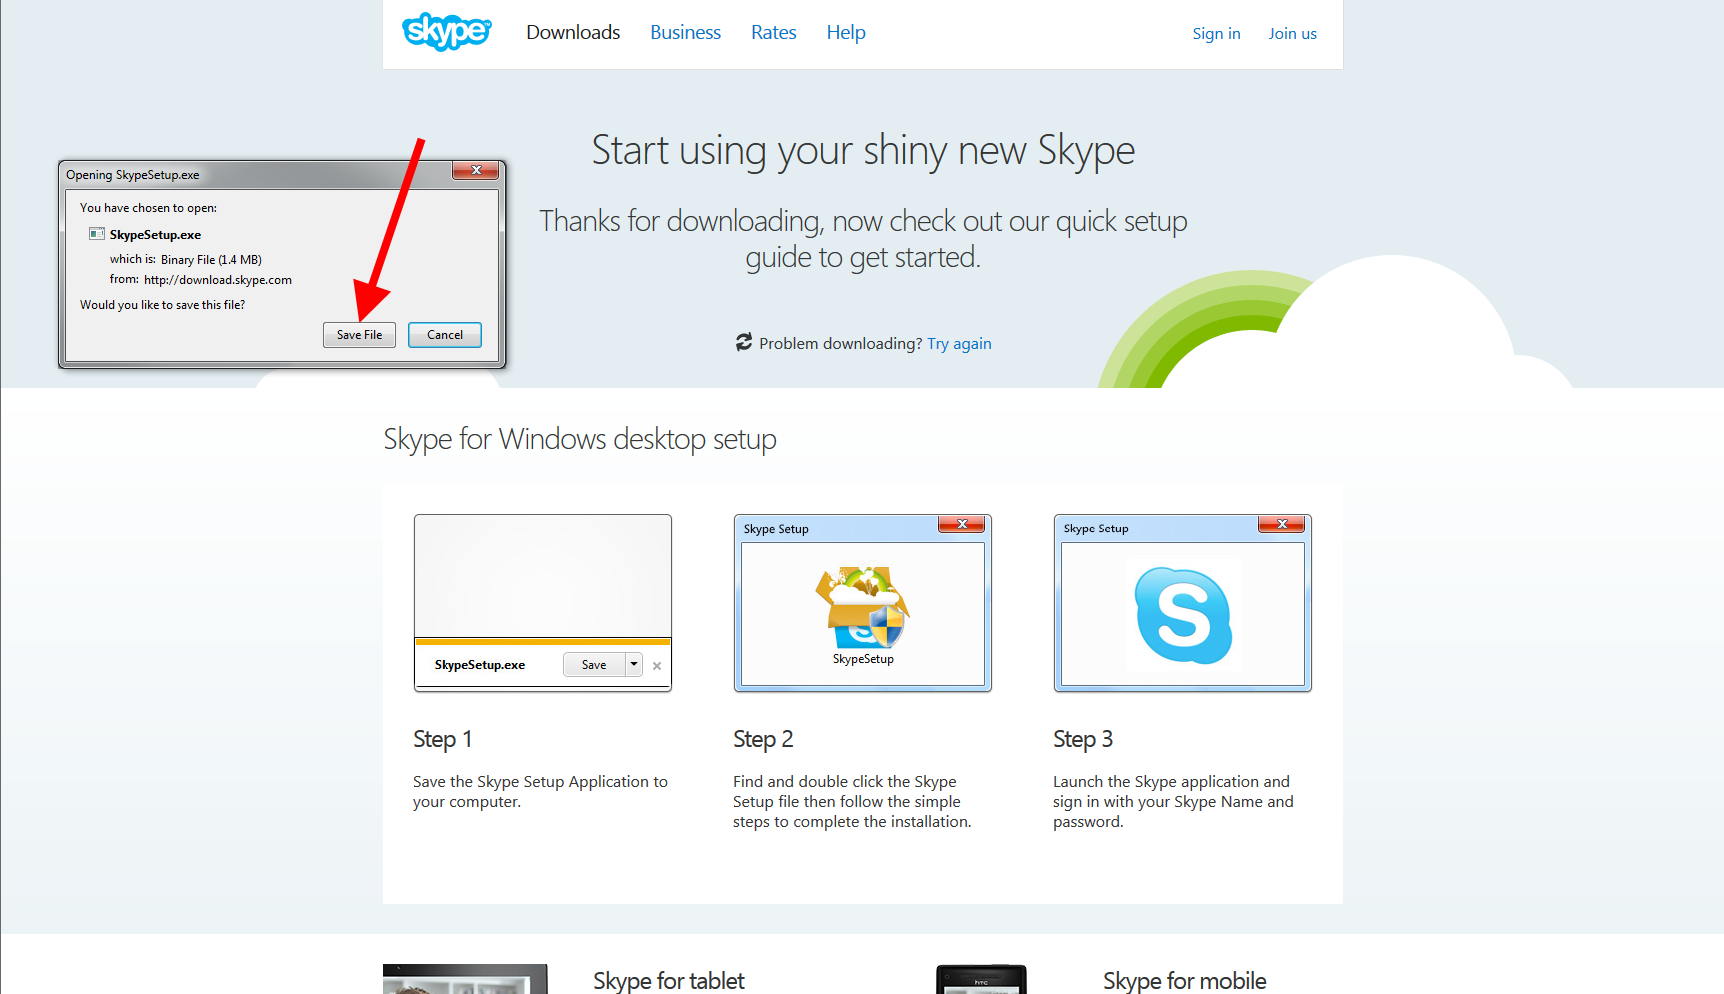 Save Skype to your Machine